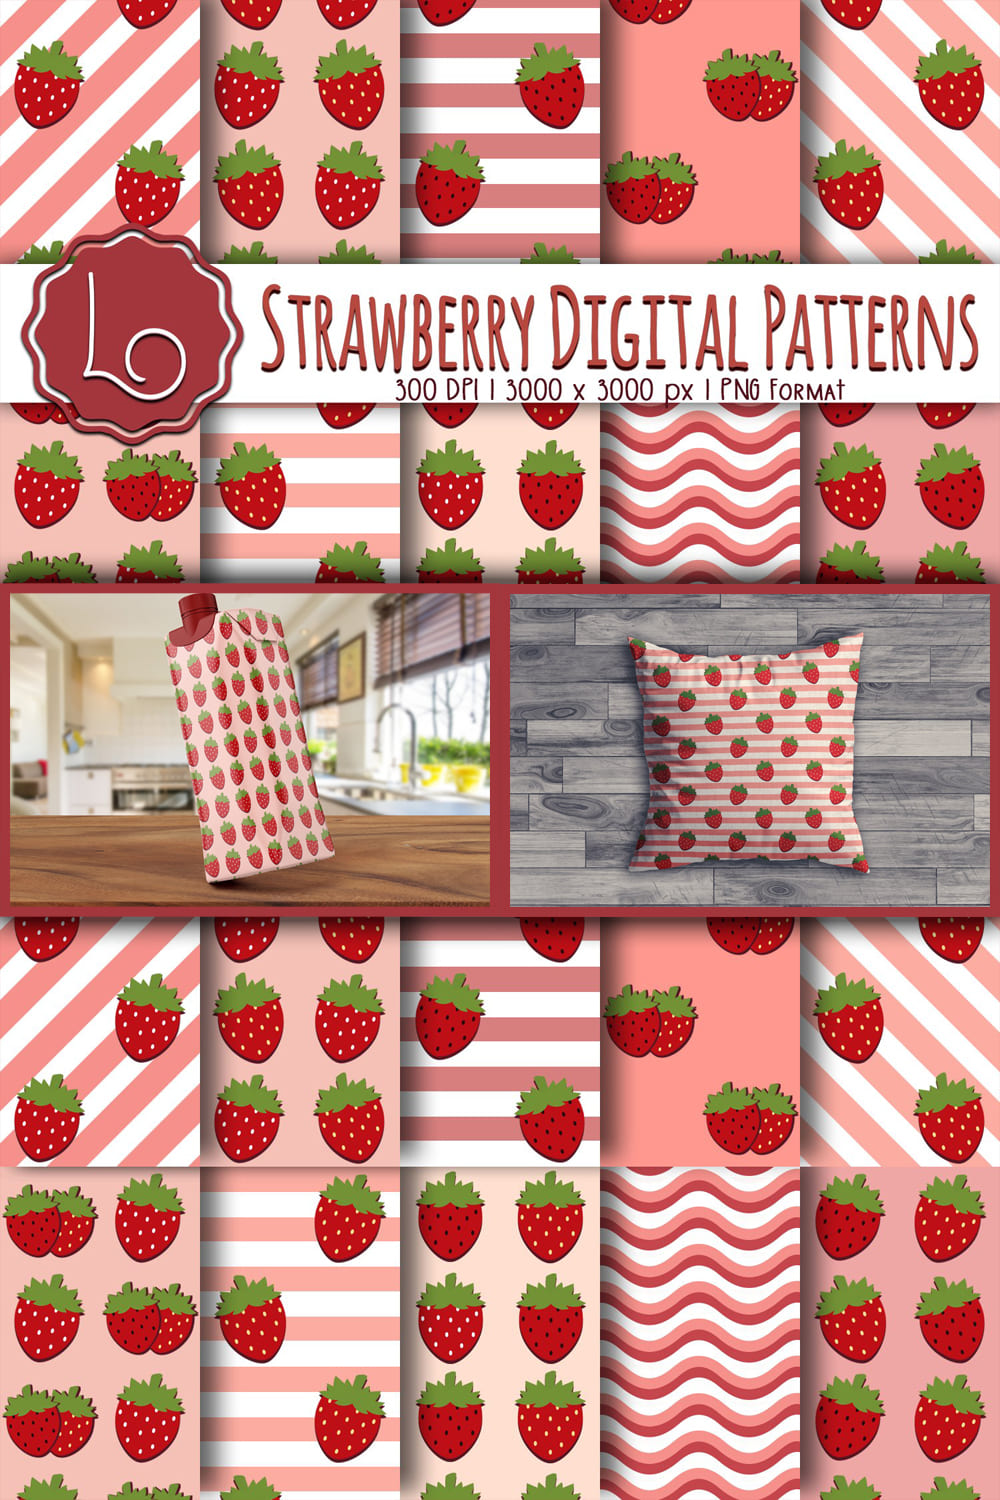 Strawberry digital patterns.